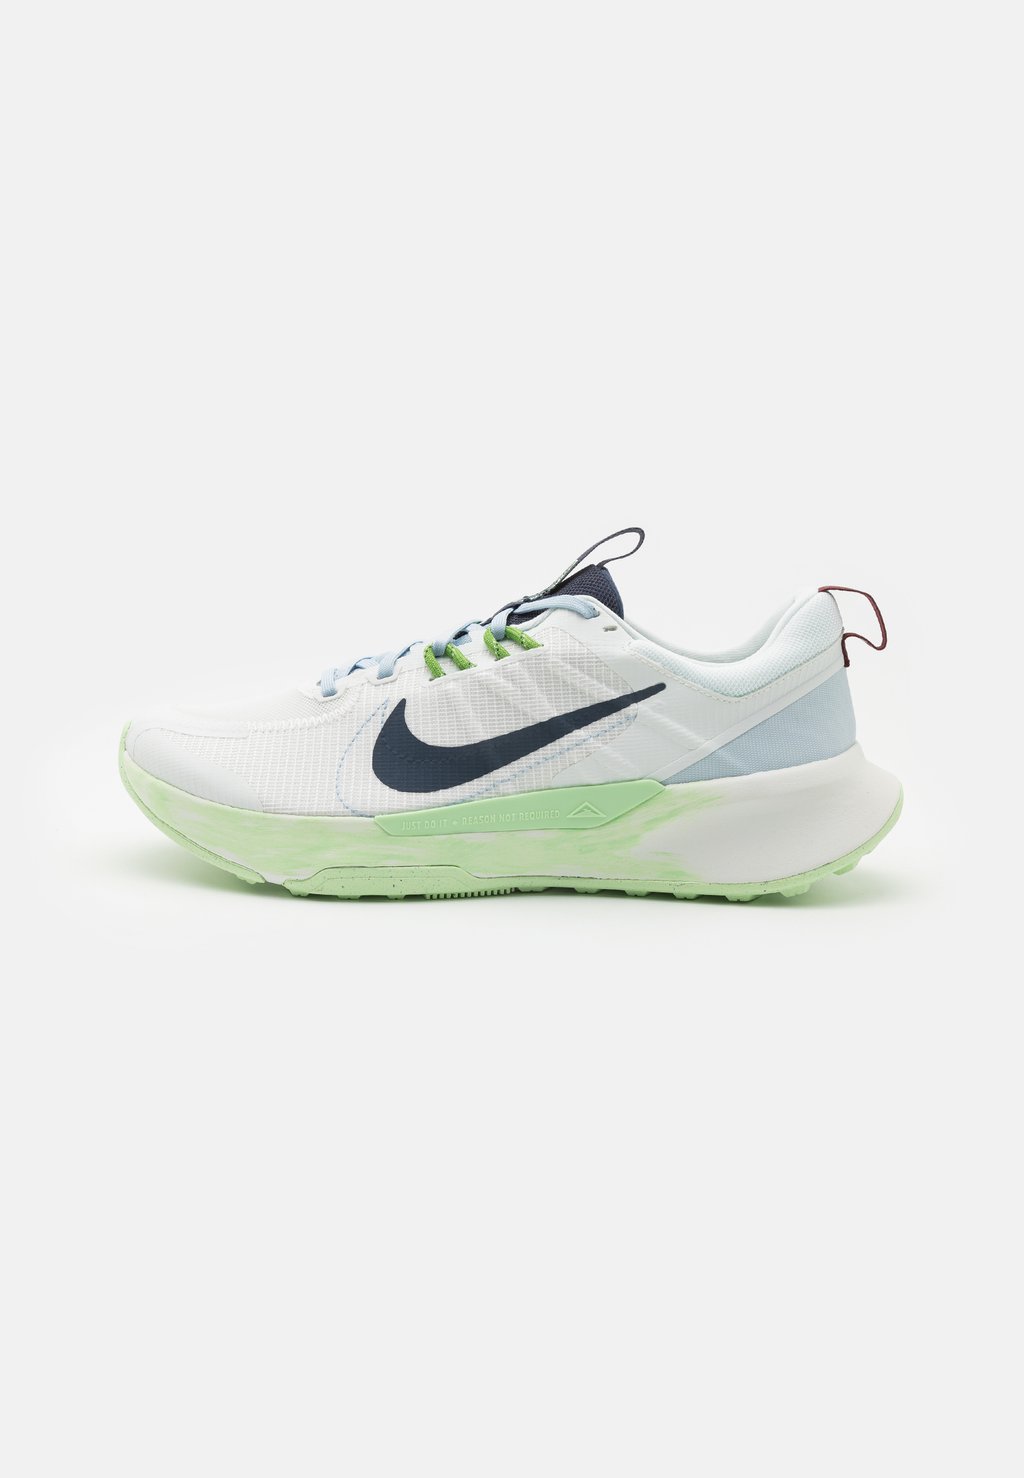 кроссовки для бега по пересеченной местности Juniper 2 Nike, цвет summit white/thunder blue/vapor green/chlorophyll/night maroon/light armory blue